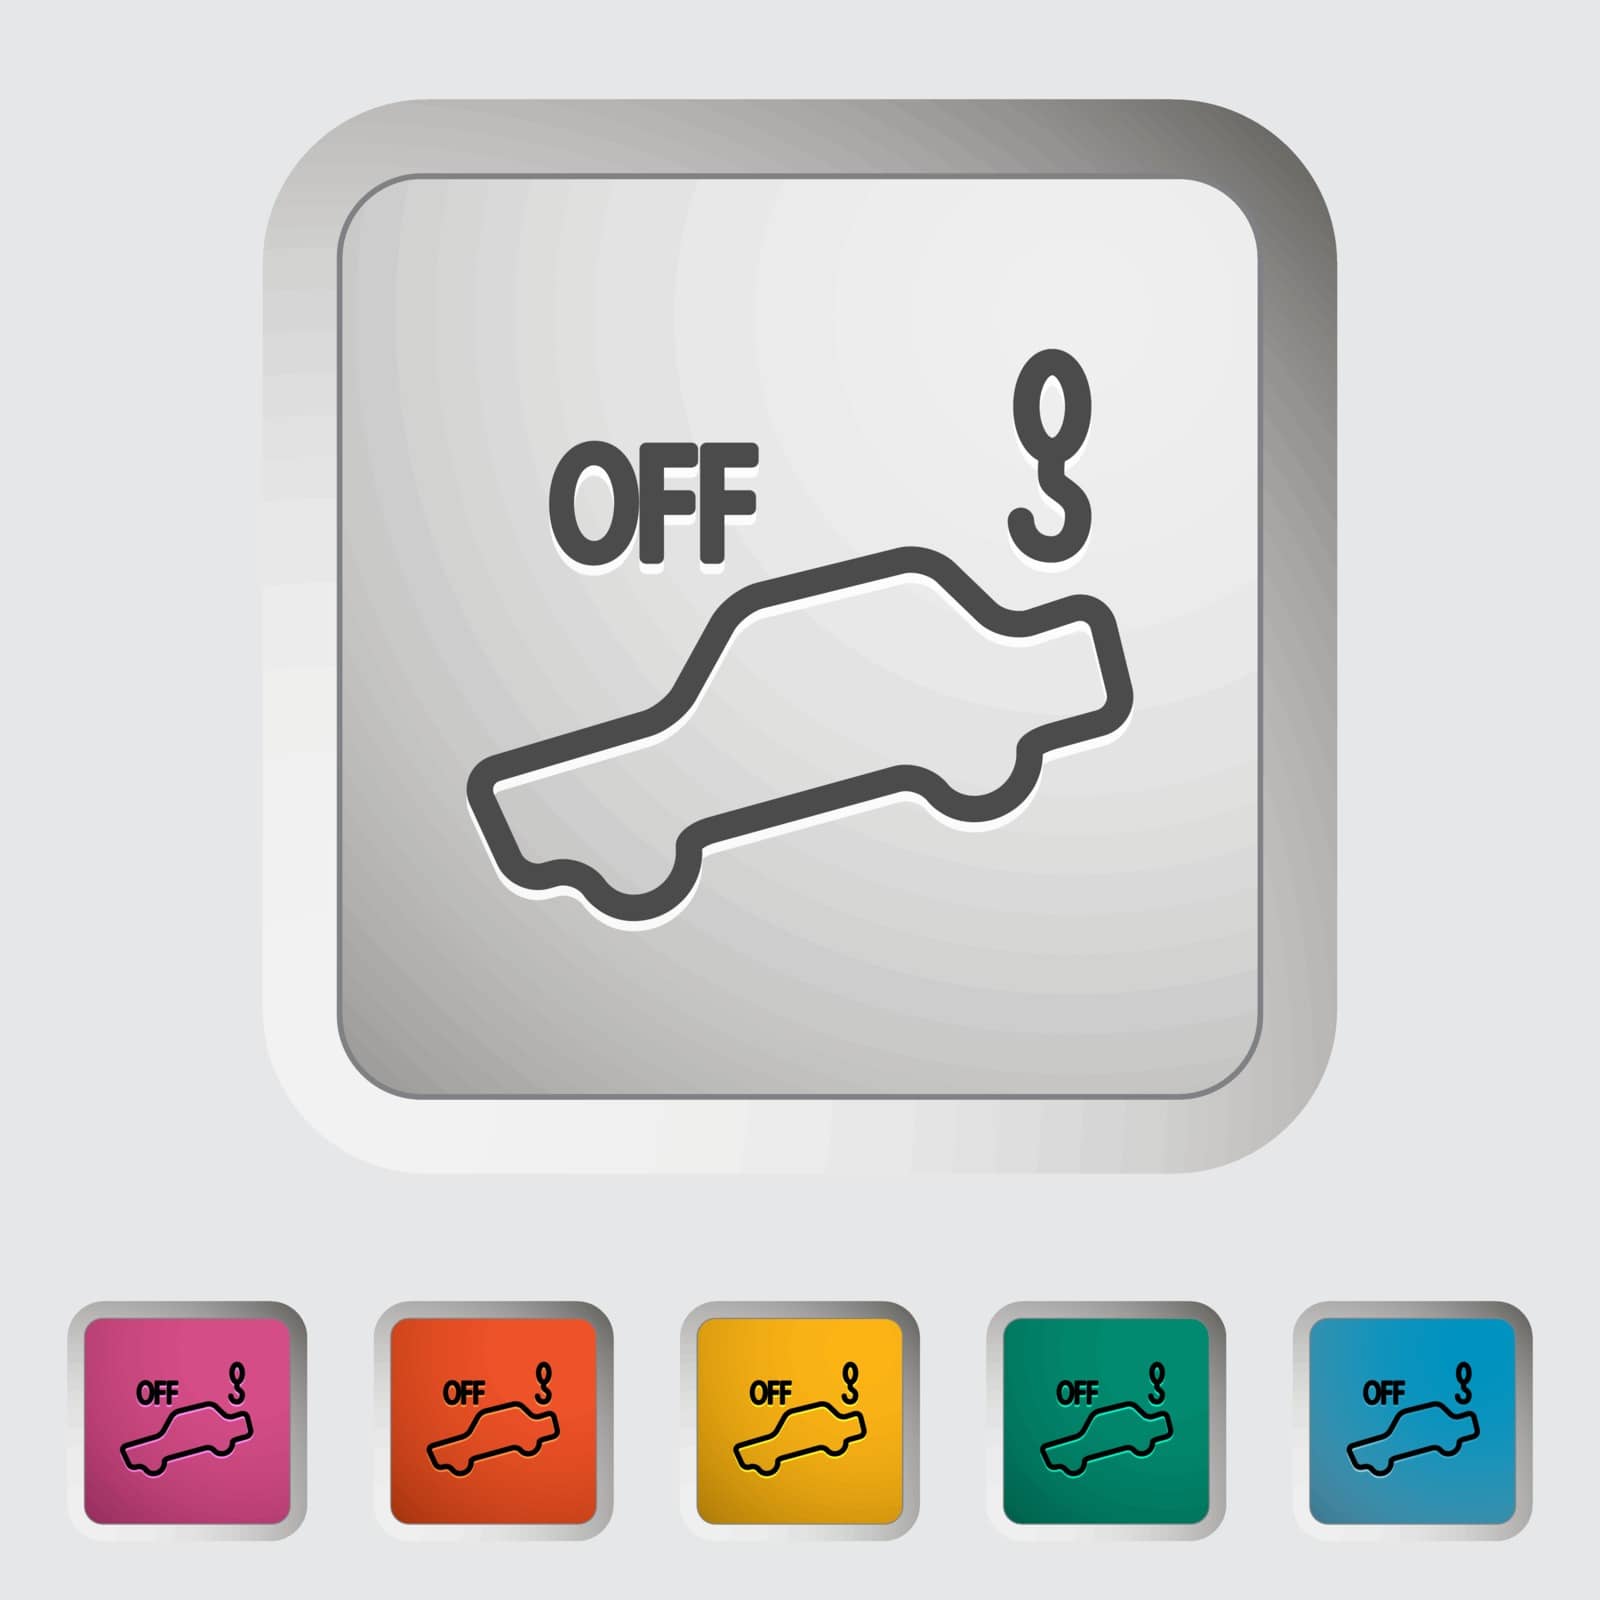 Tow away alarm off. Single icon. Vector illustration..